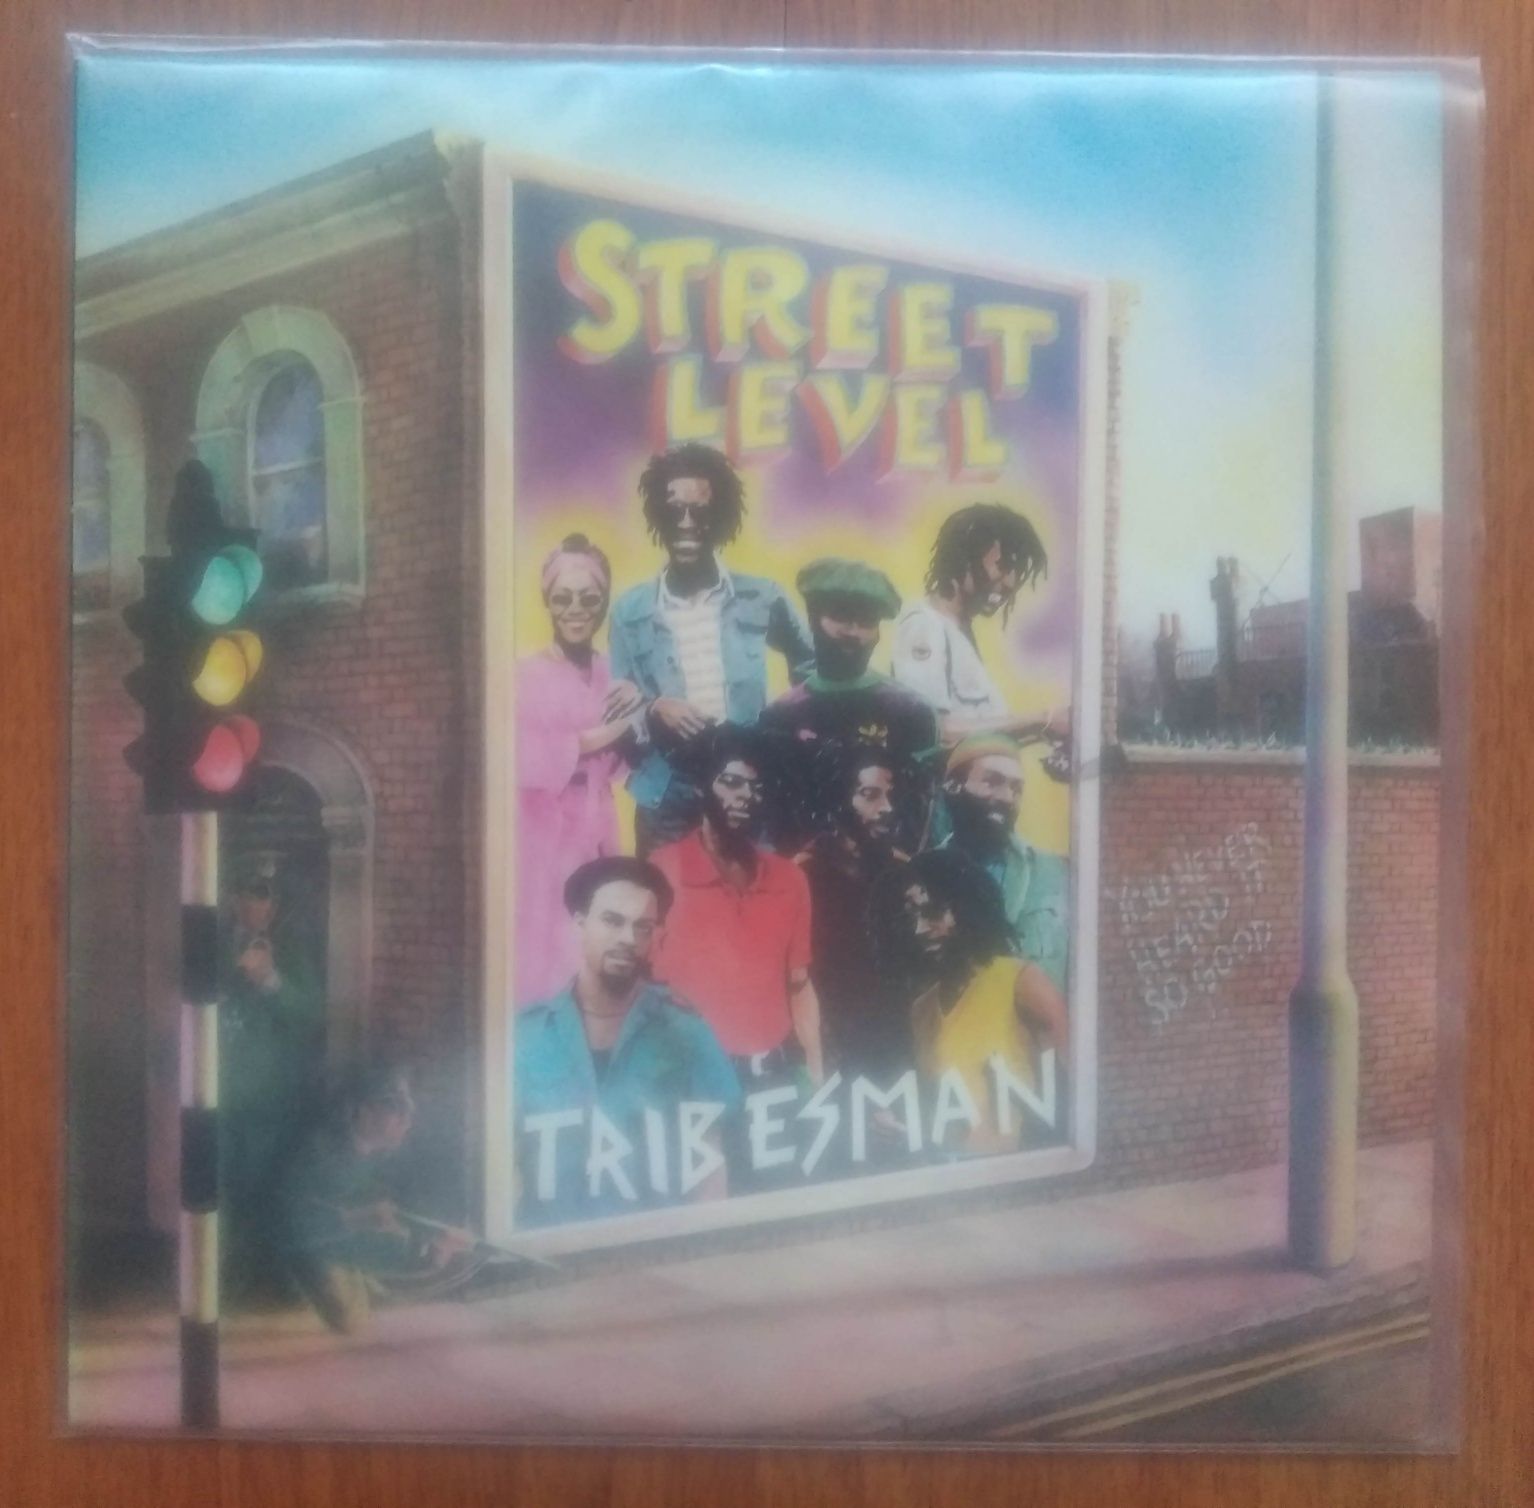 Street Level disco de vinil "Tribesman"